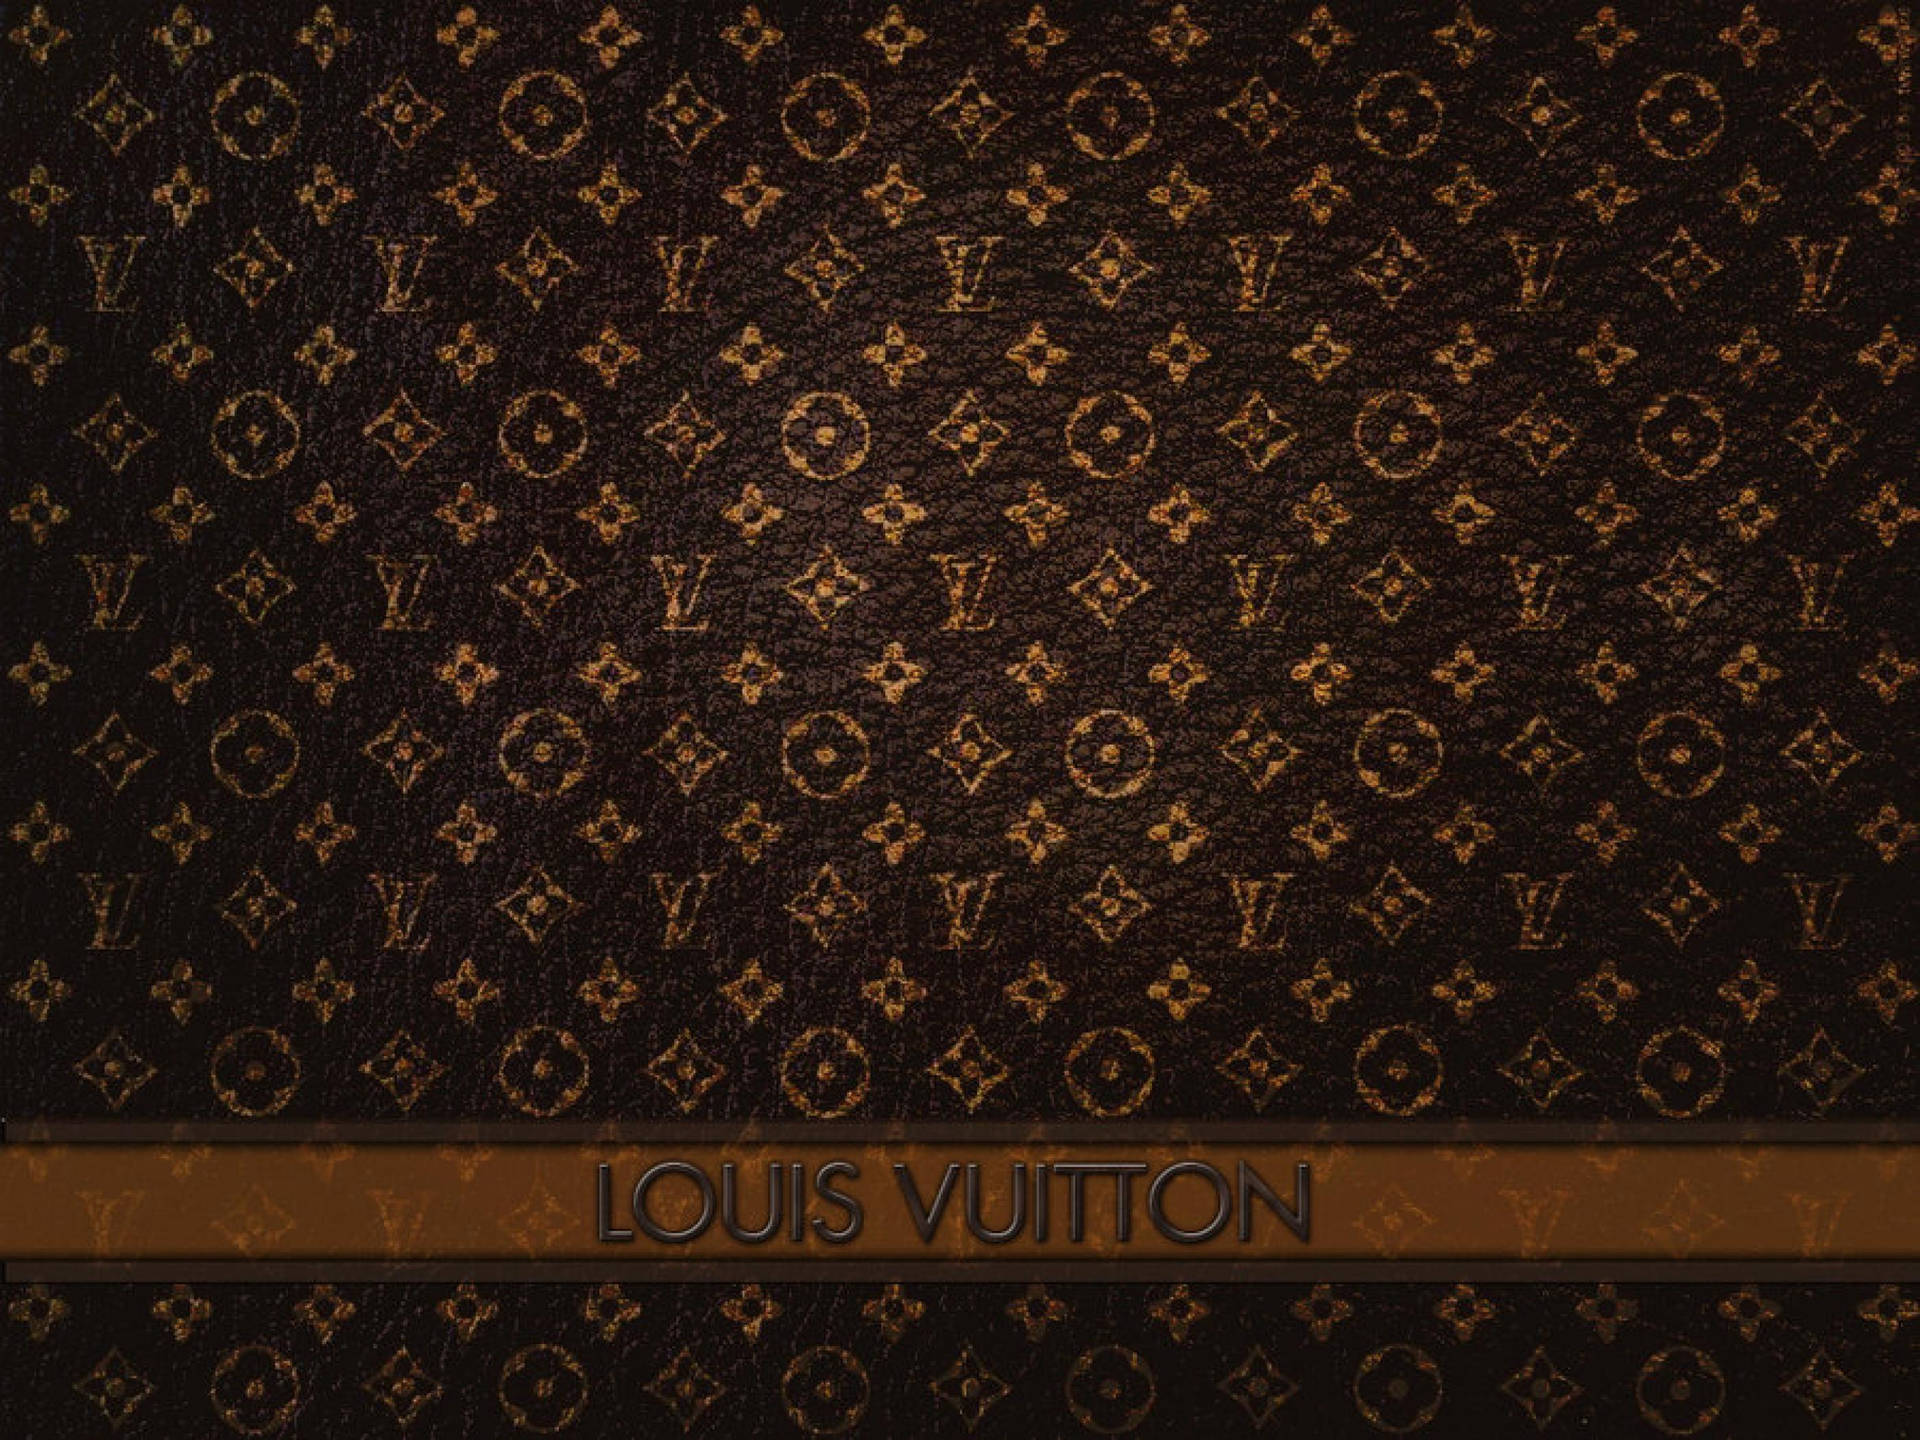 Louis Vuitton 2800X2100 wallpaper